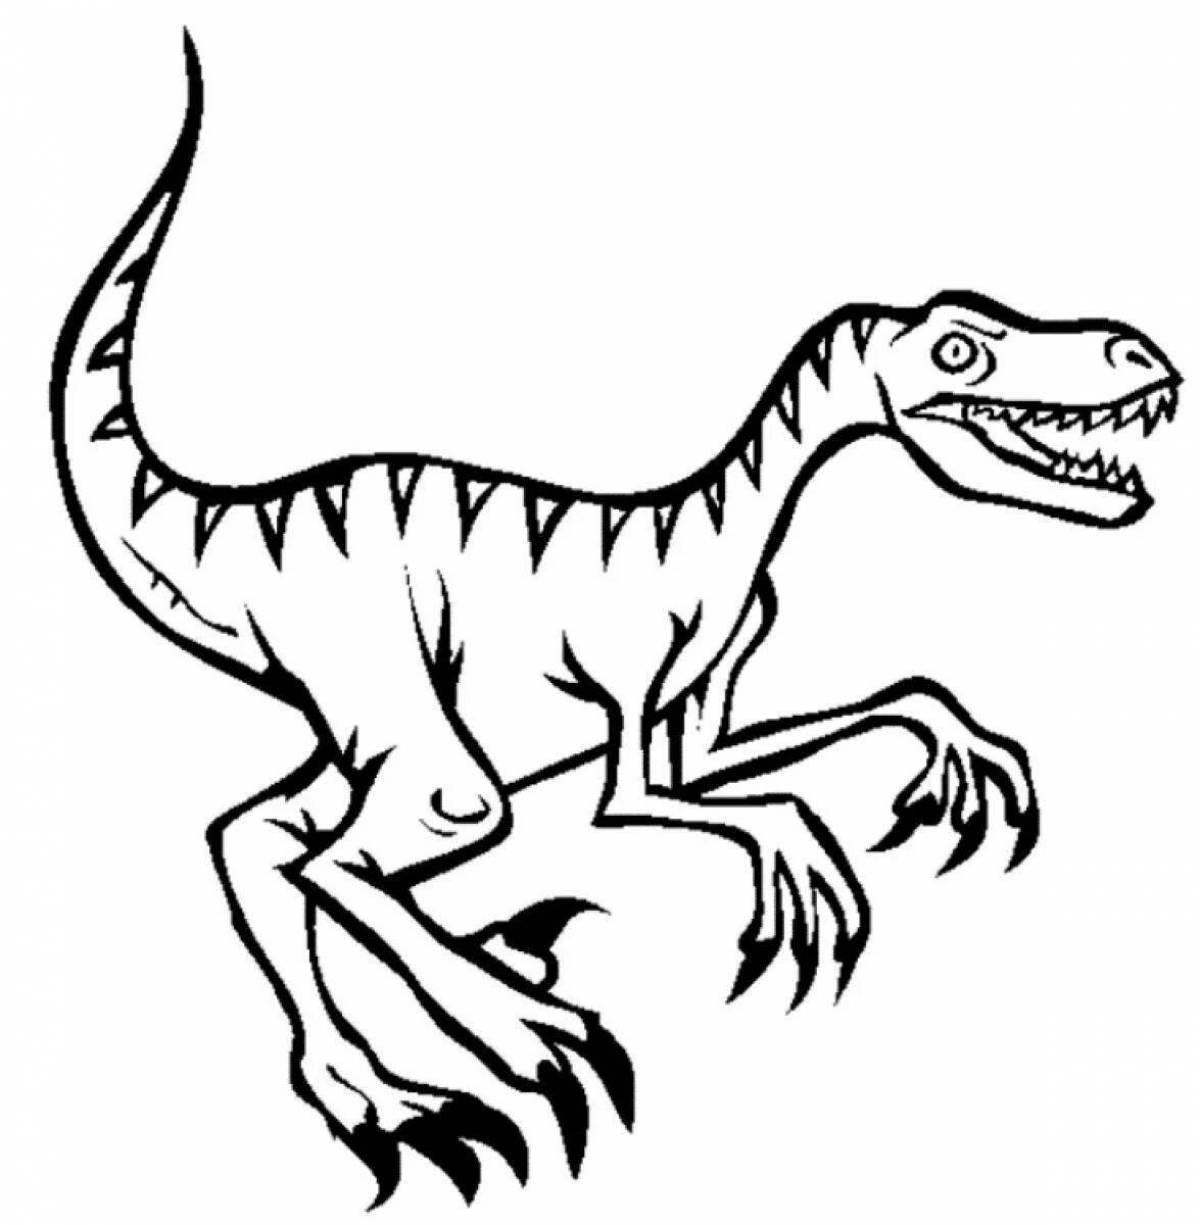 Dinosaur predator #2